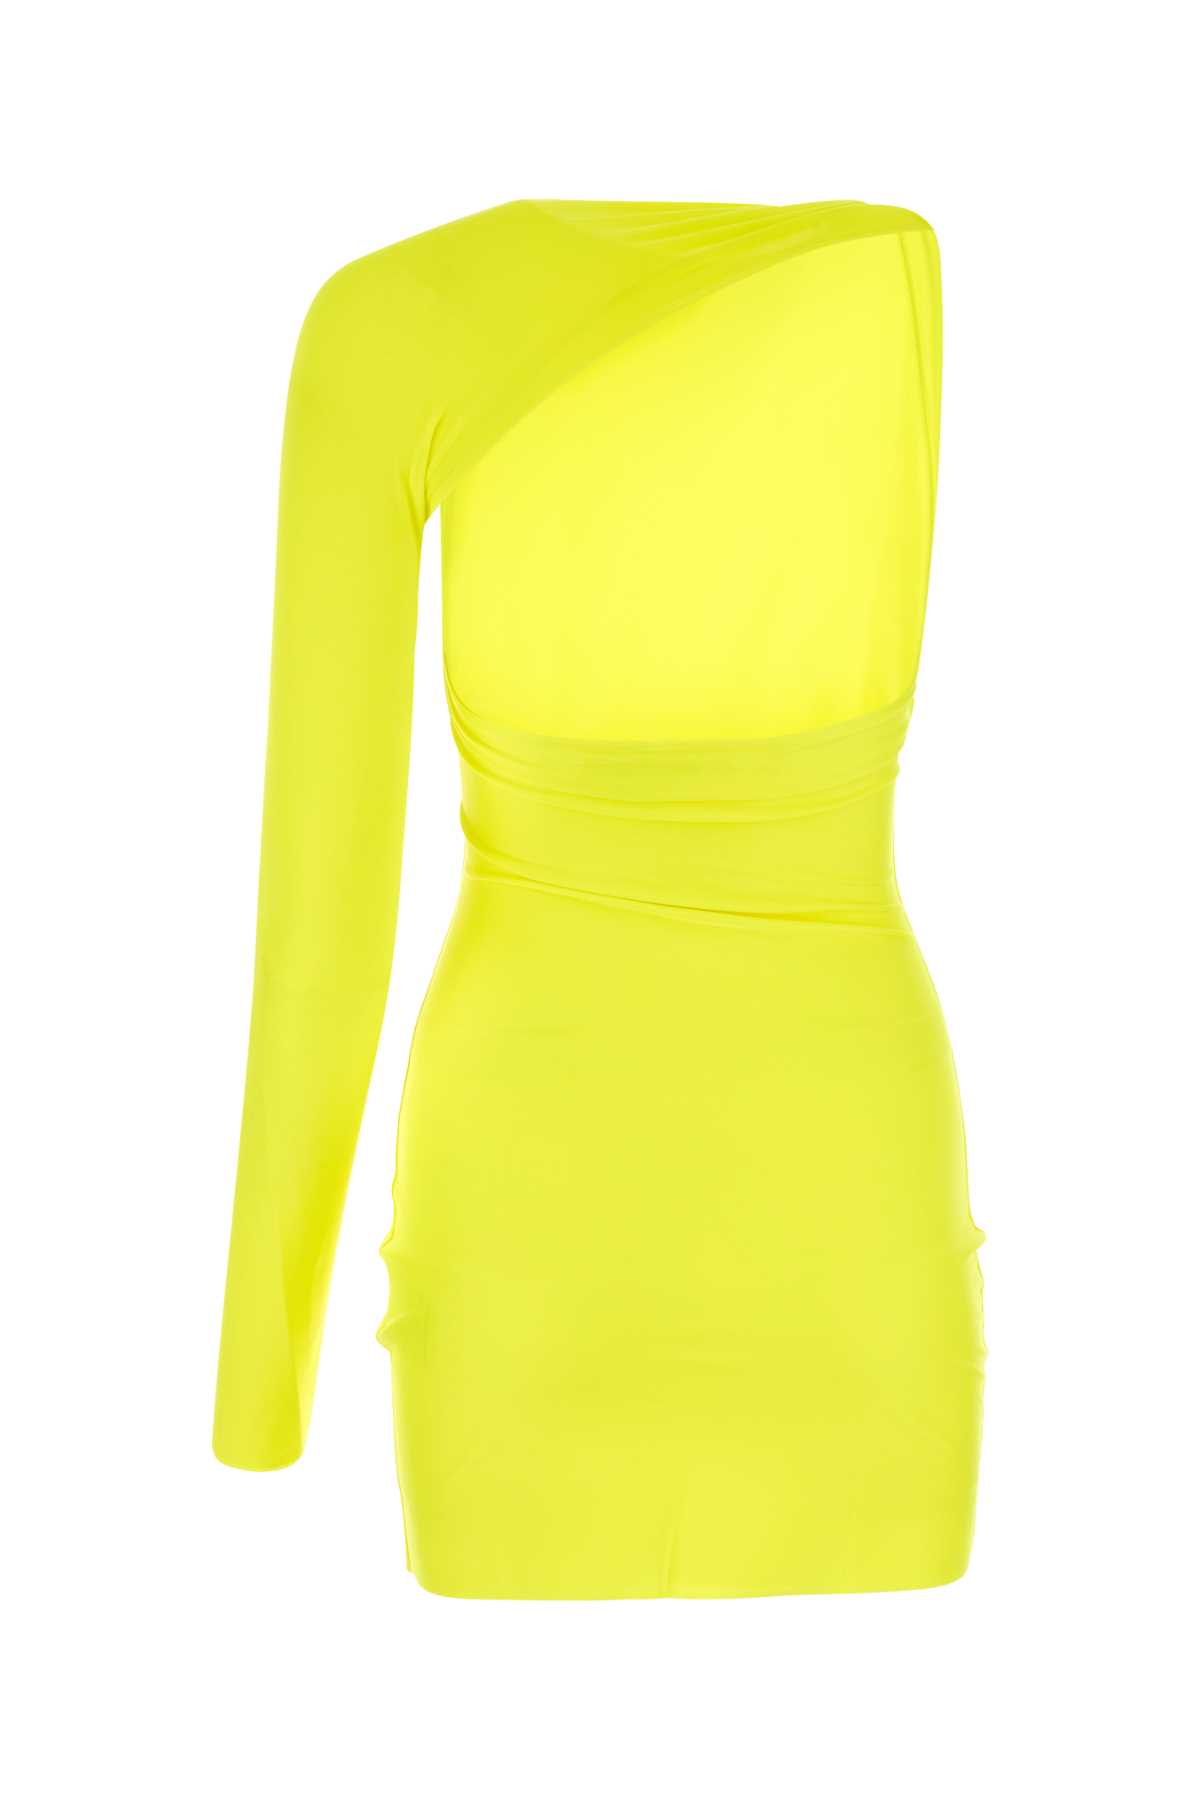 Alyx Fluo Yellow Satin Mini Skirt In Ylw0041